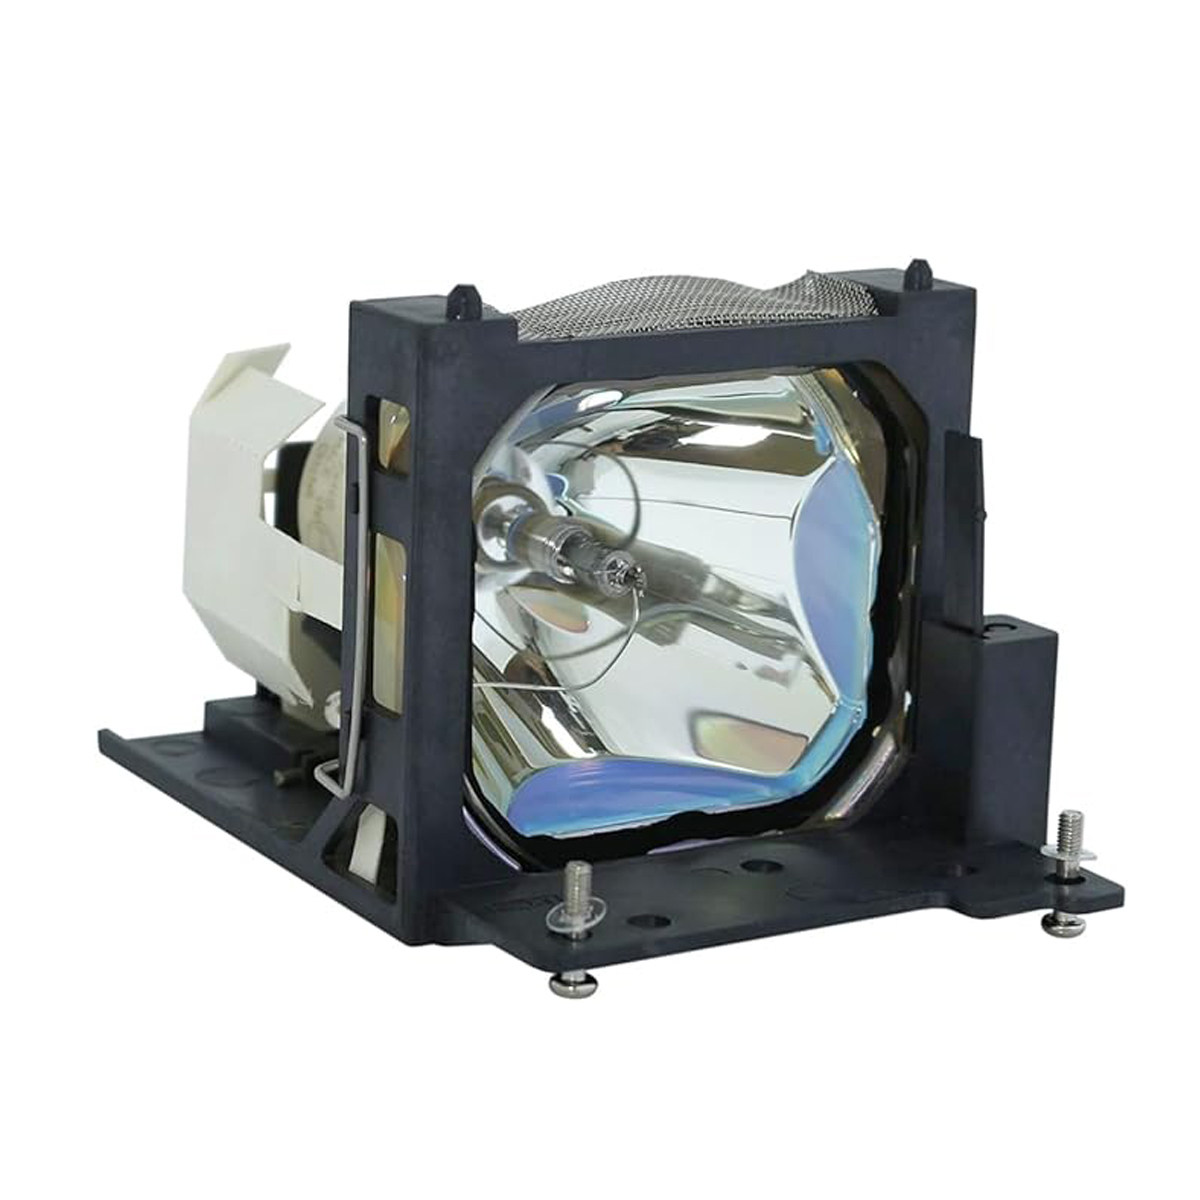 Replacement Projector lamp RLC-150-003 For VIEWSONIC PJ550 PJ550-1 PJ550-2 PJ551-1